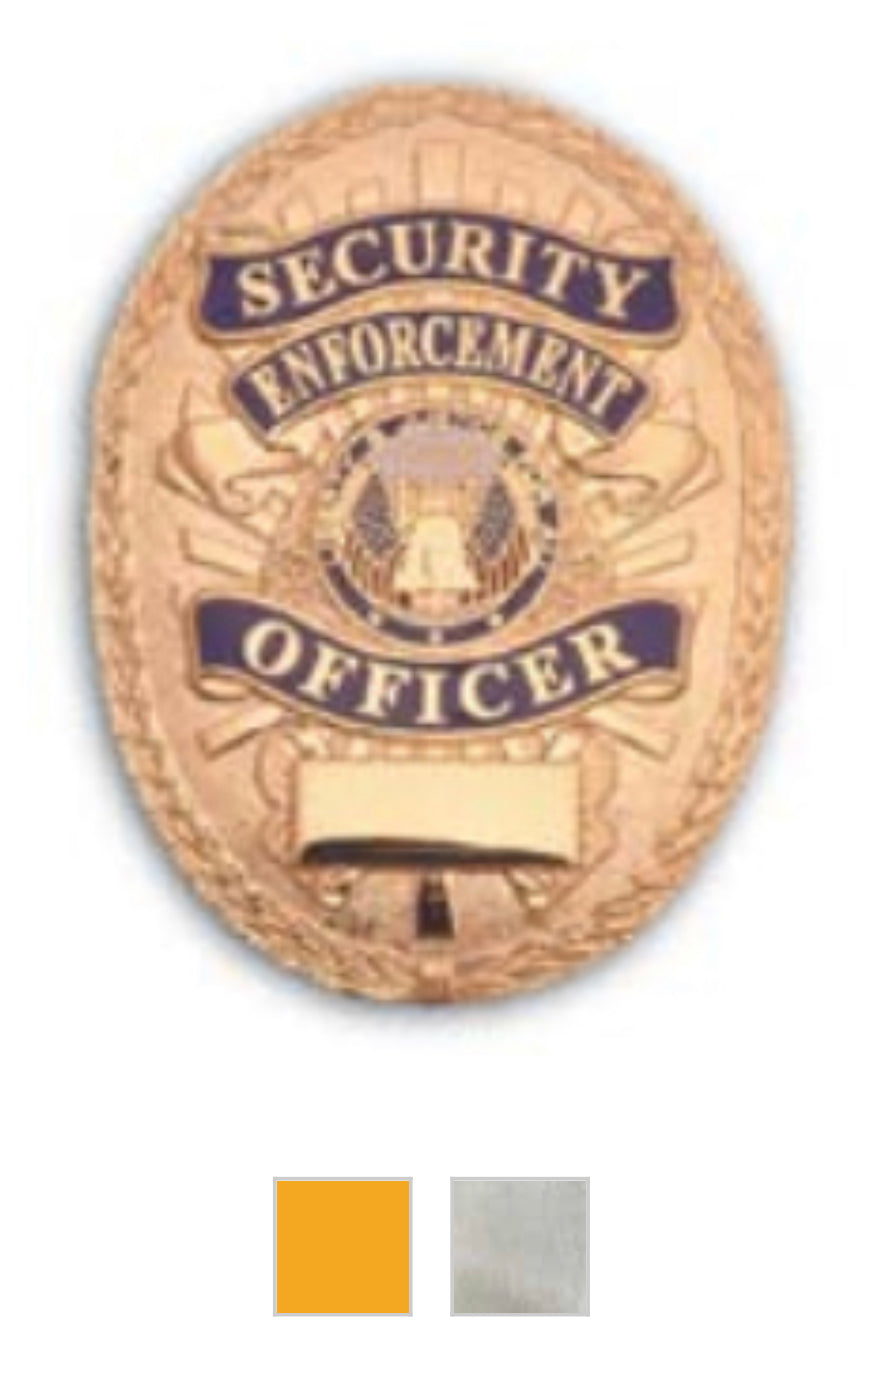 Oval Security Enforcement Badge